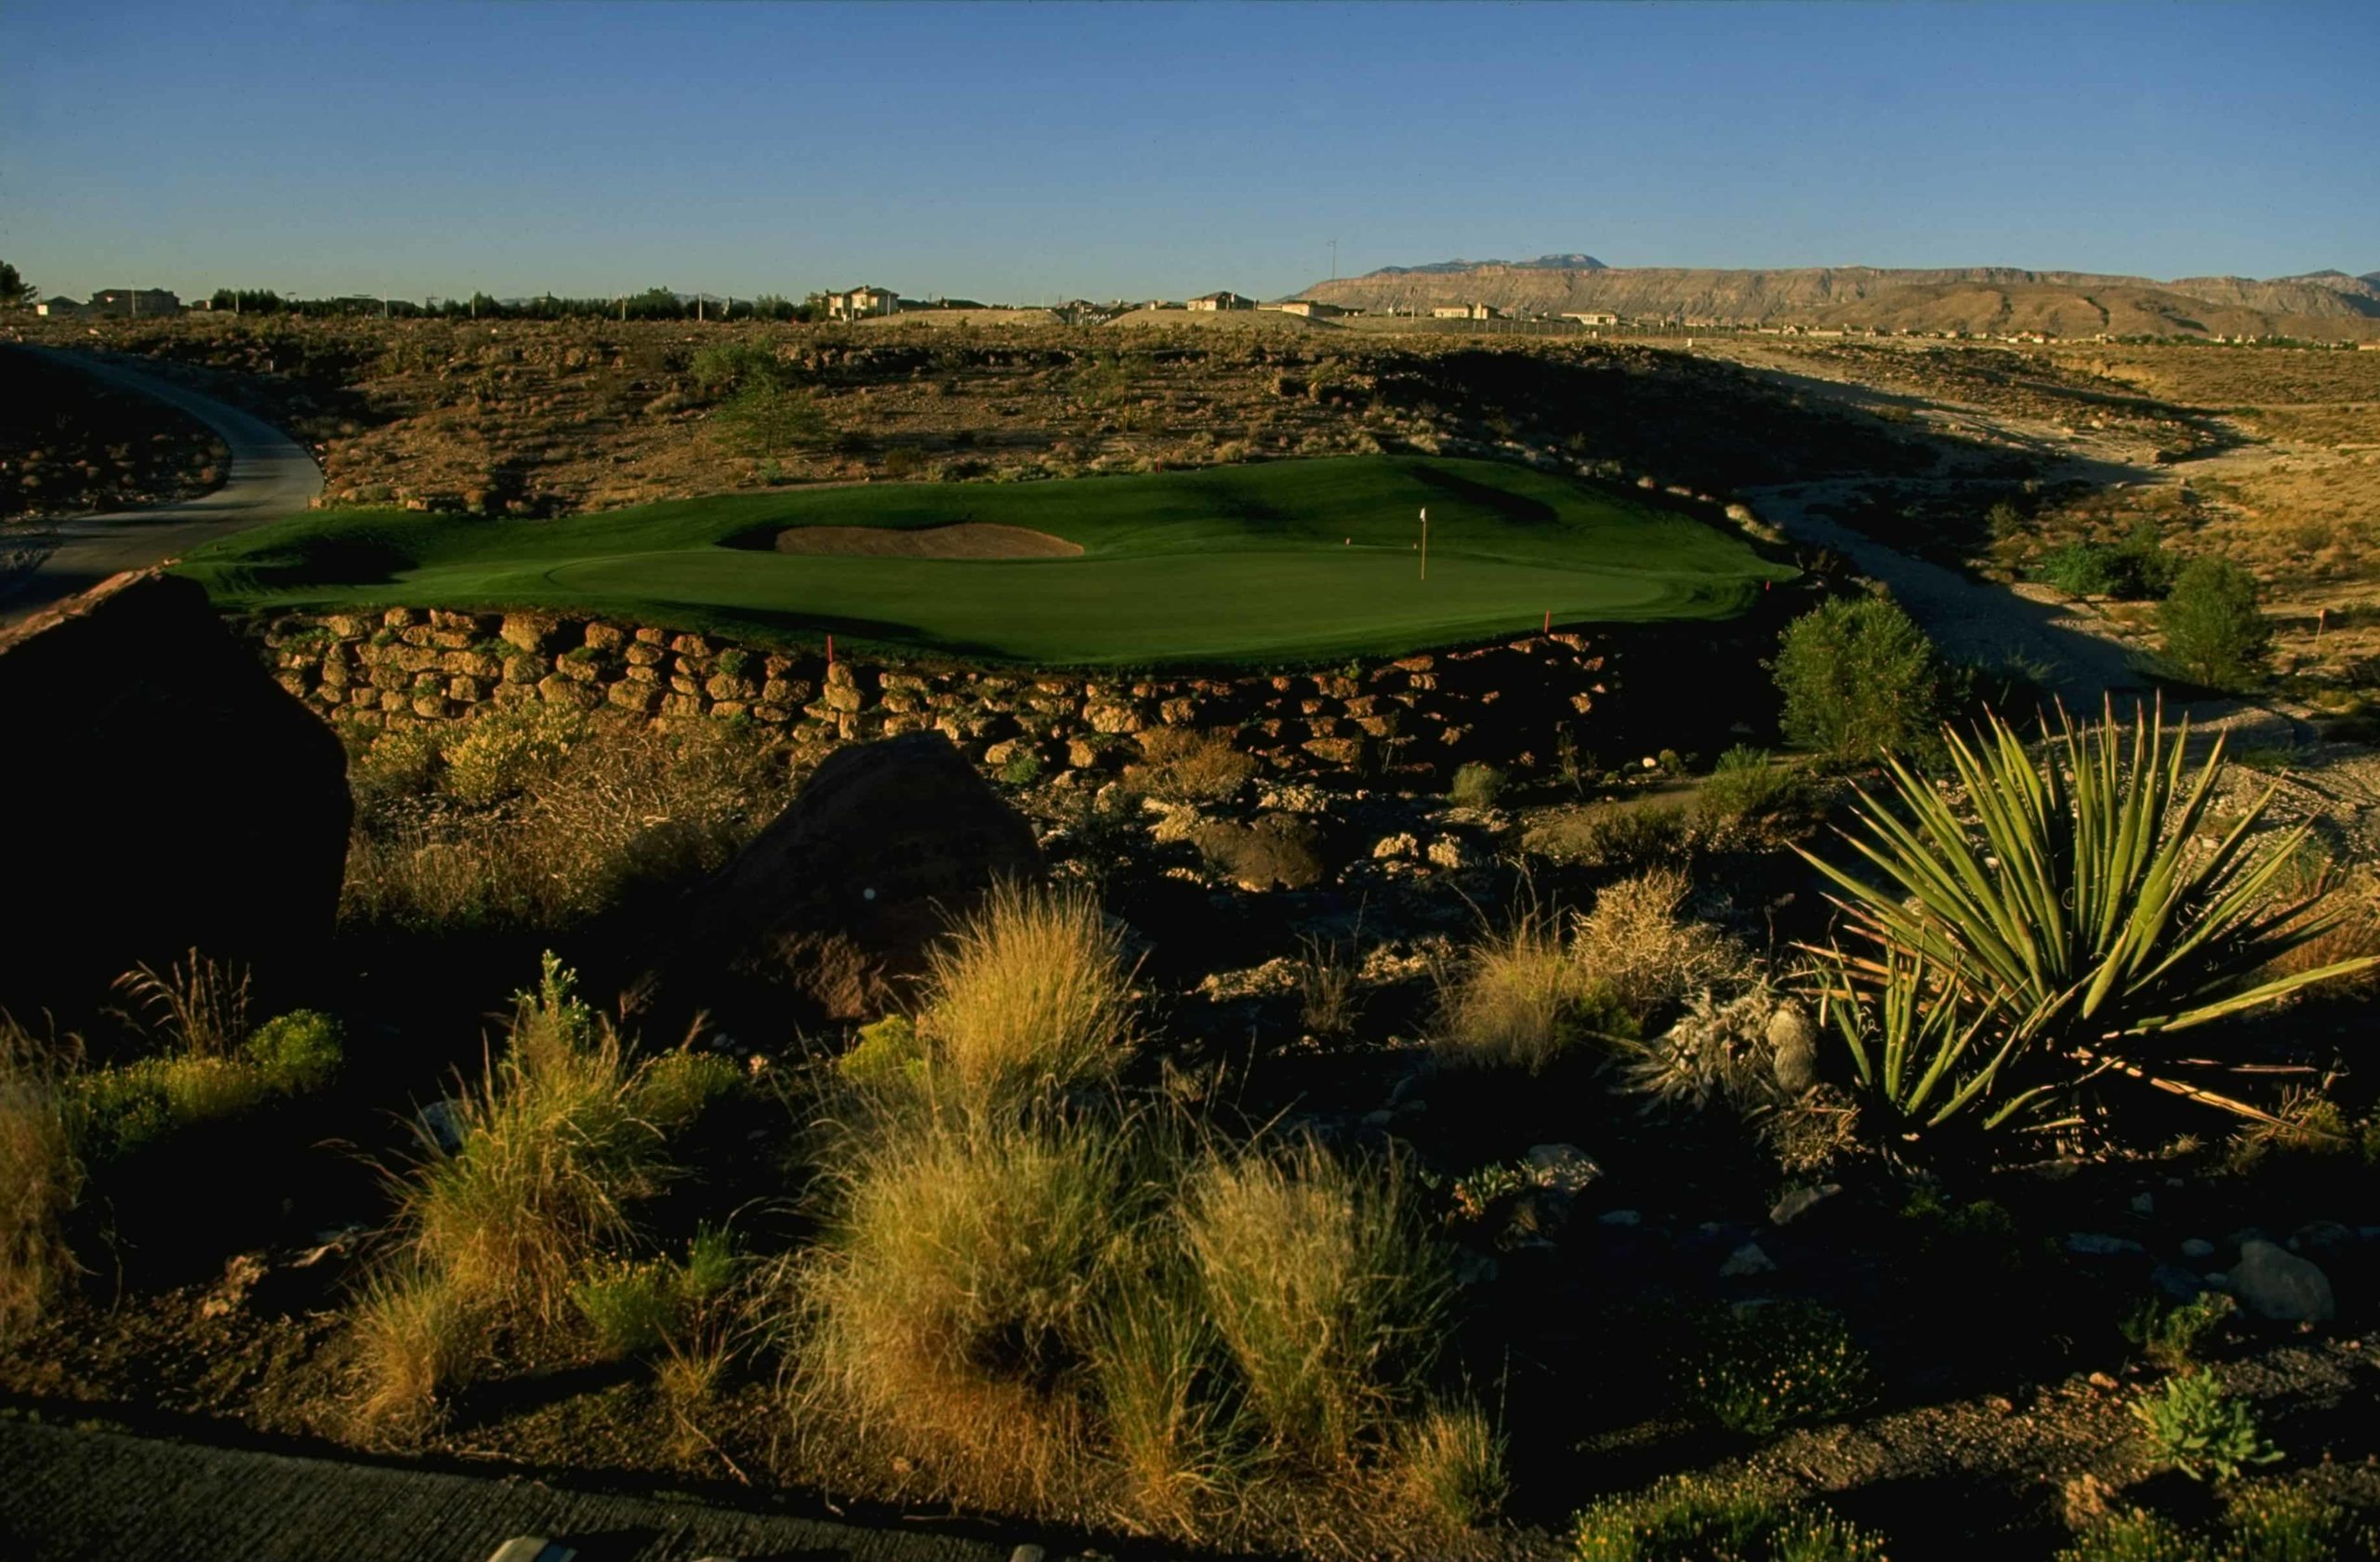 JW Marriott - Las Vegas Golf Vacations, Golf Packages at TPC Las Vegas 